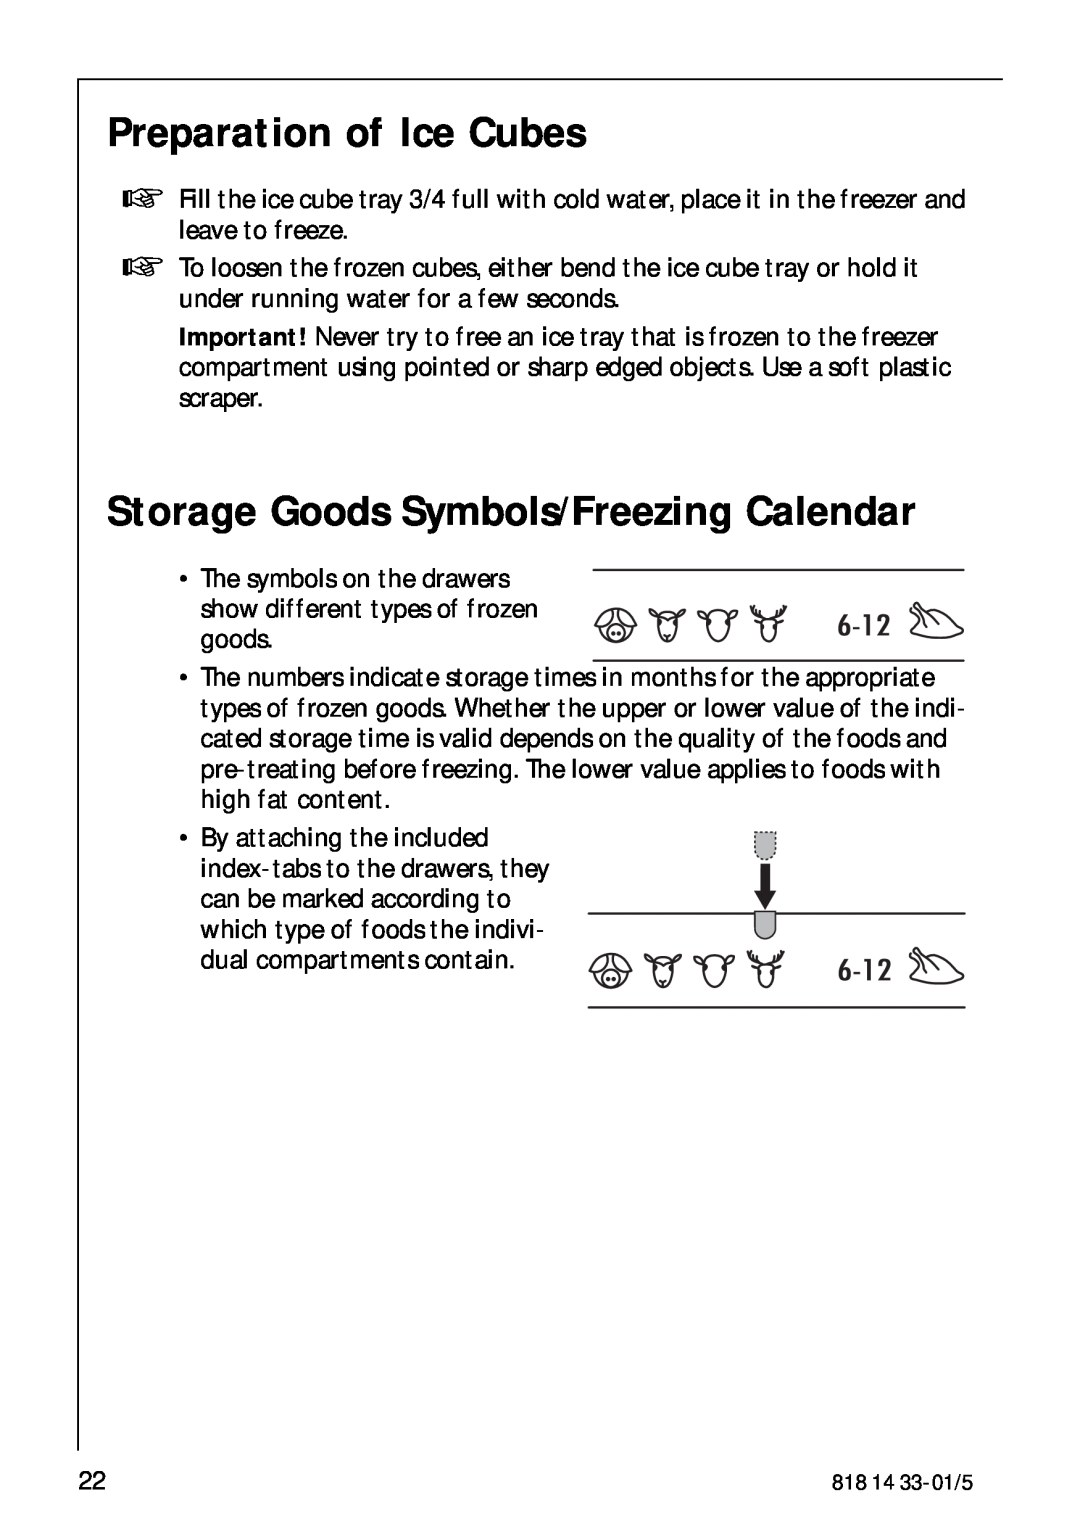 AEG 2150-6GS manual Preparation of Ice Cubes, Storage Goods Symbols/Freezing Calendar 